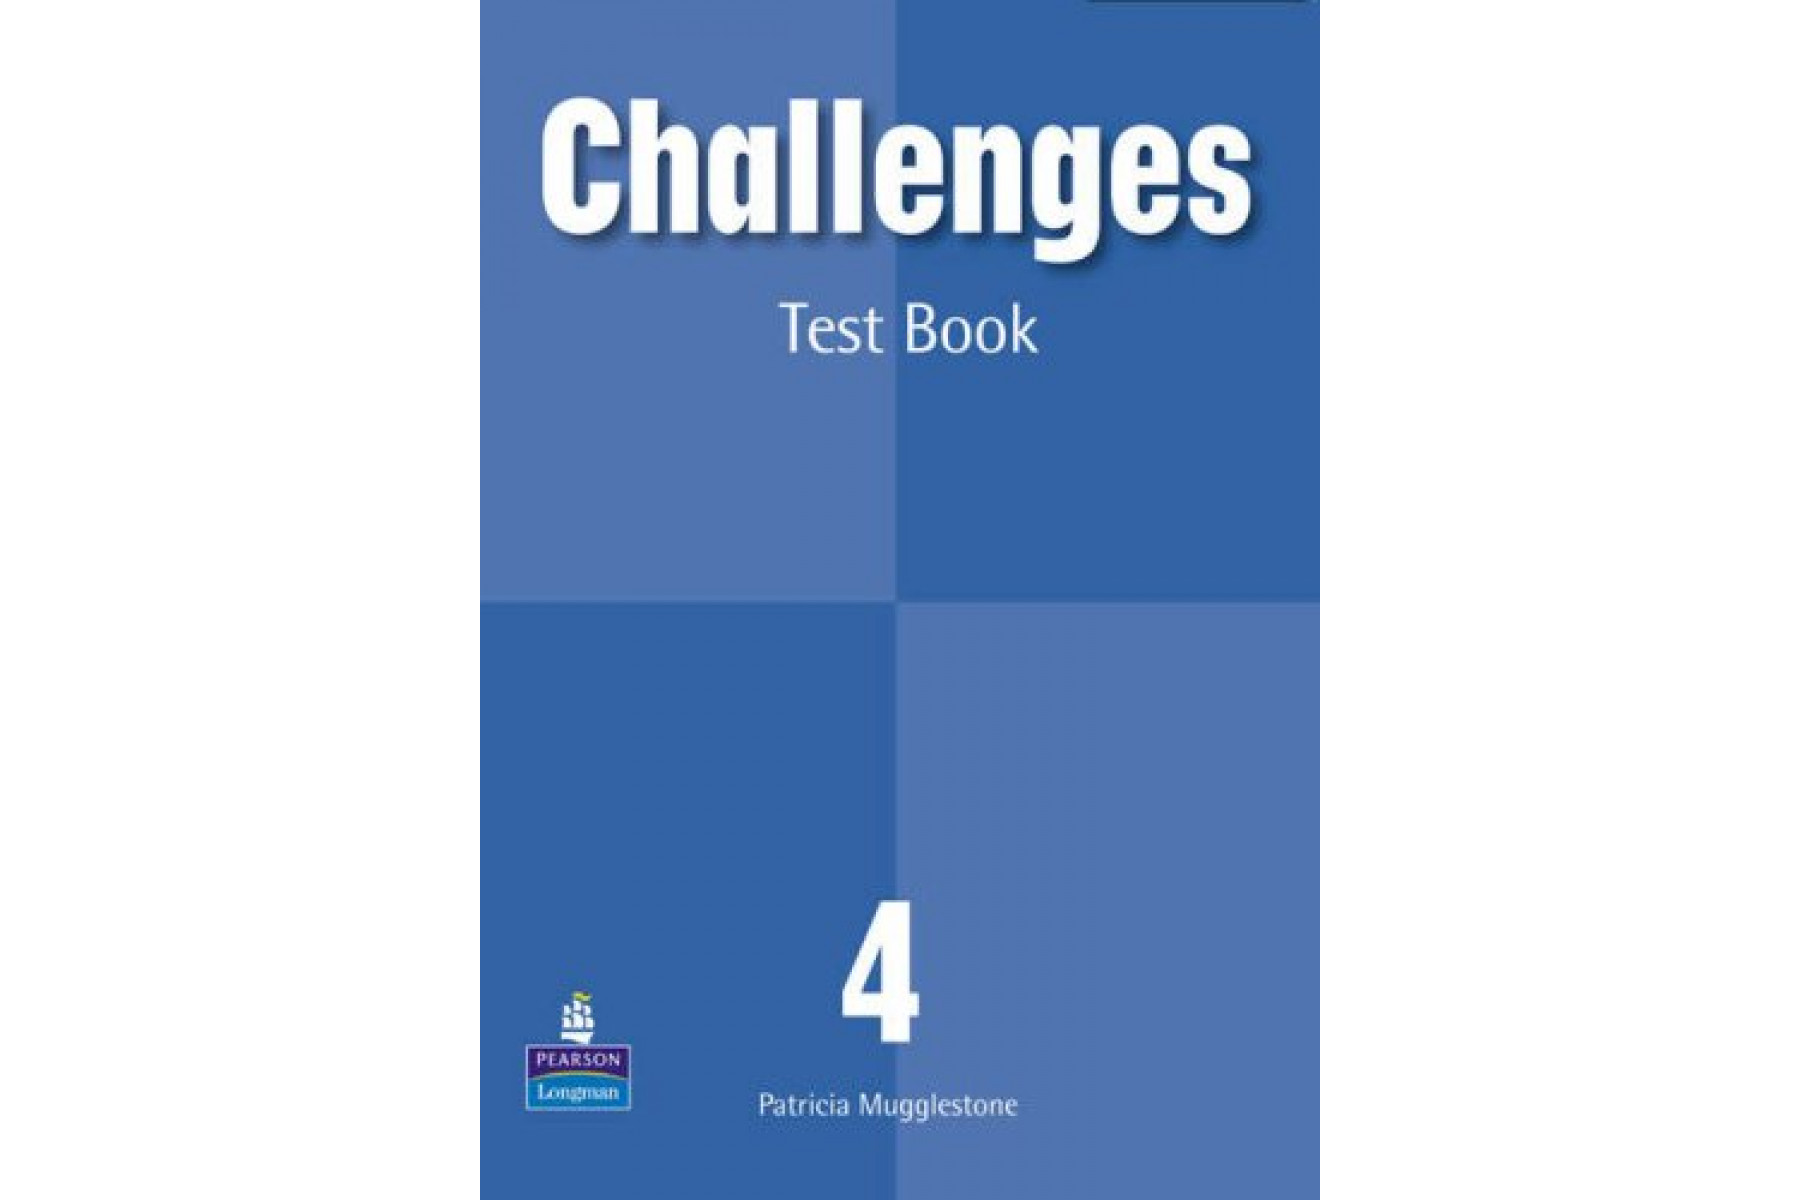 Английский язык test book. А 4 Challenge. Test book. Challenges 4 учебник. Учебники Pearson по английскому.